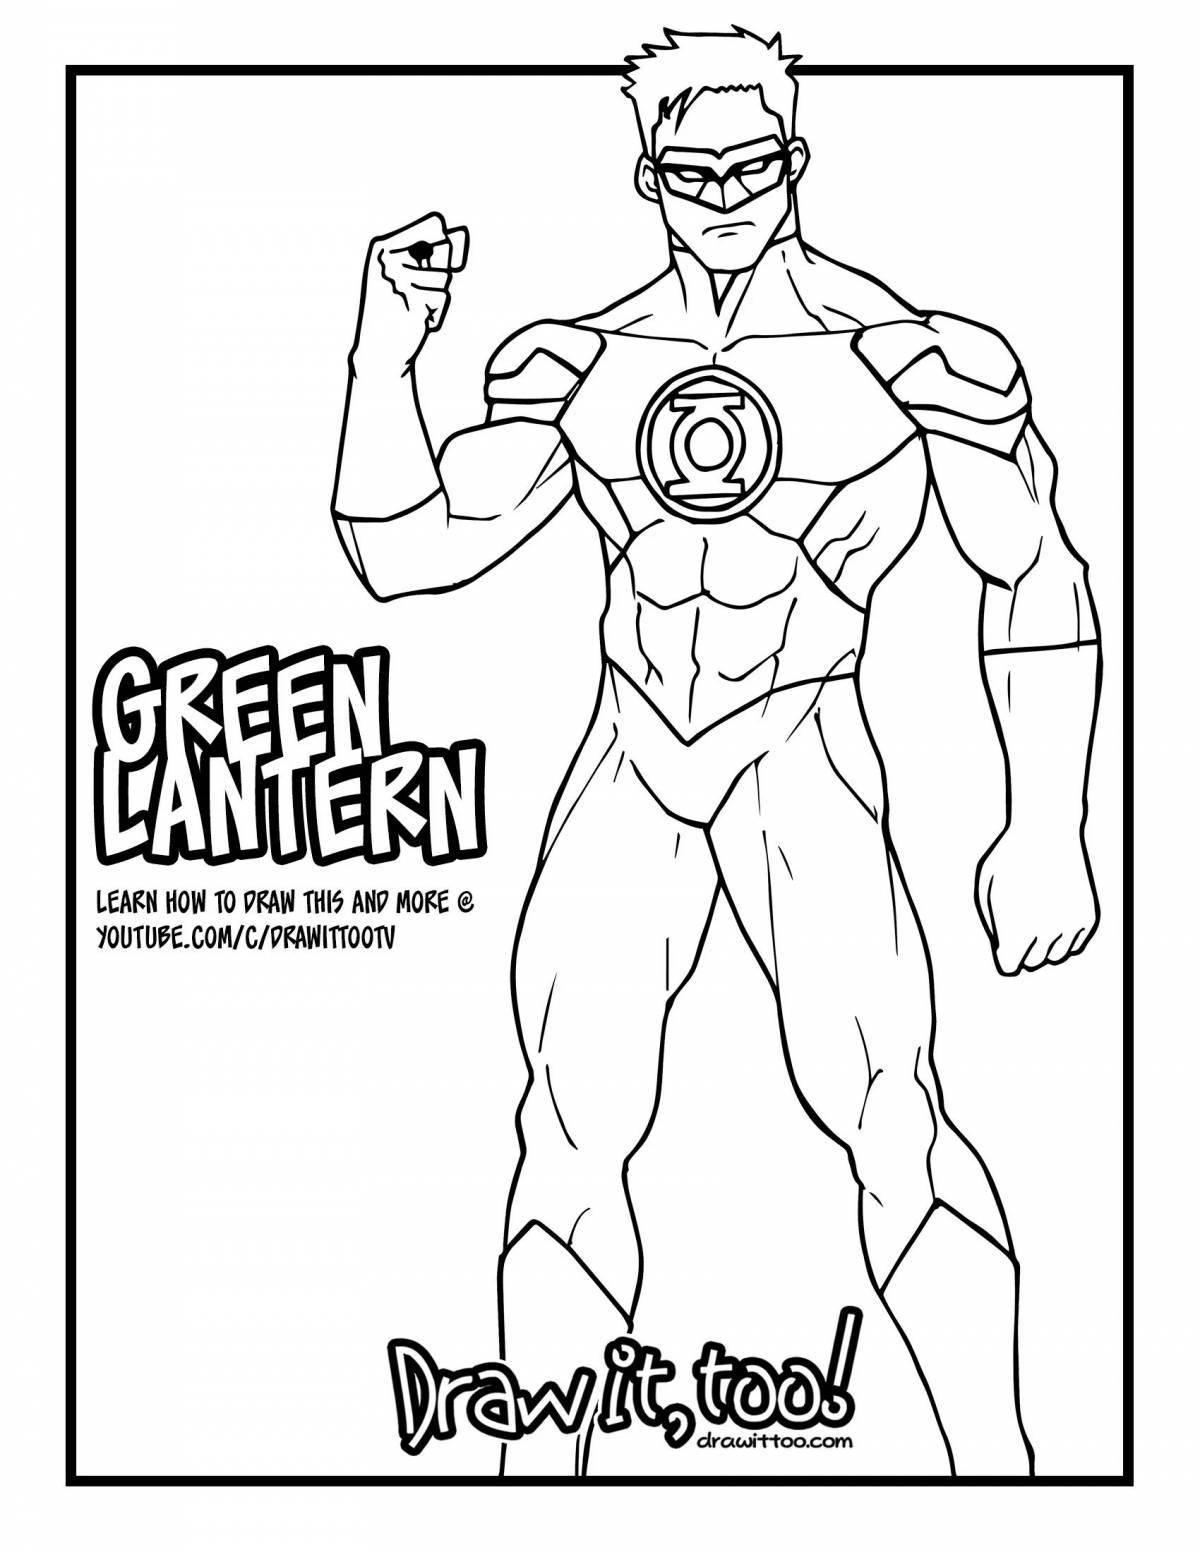 Dazzling green lantern coloring page